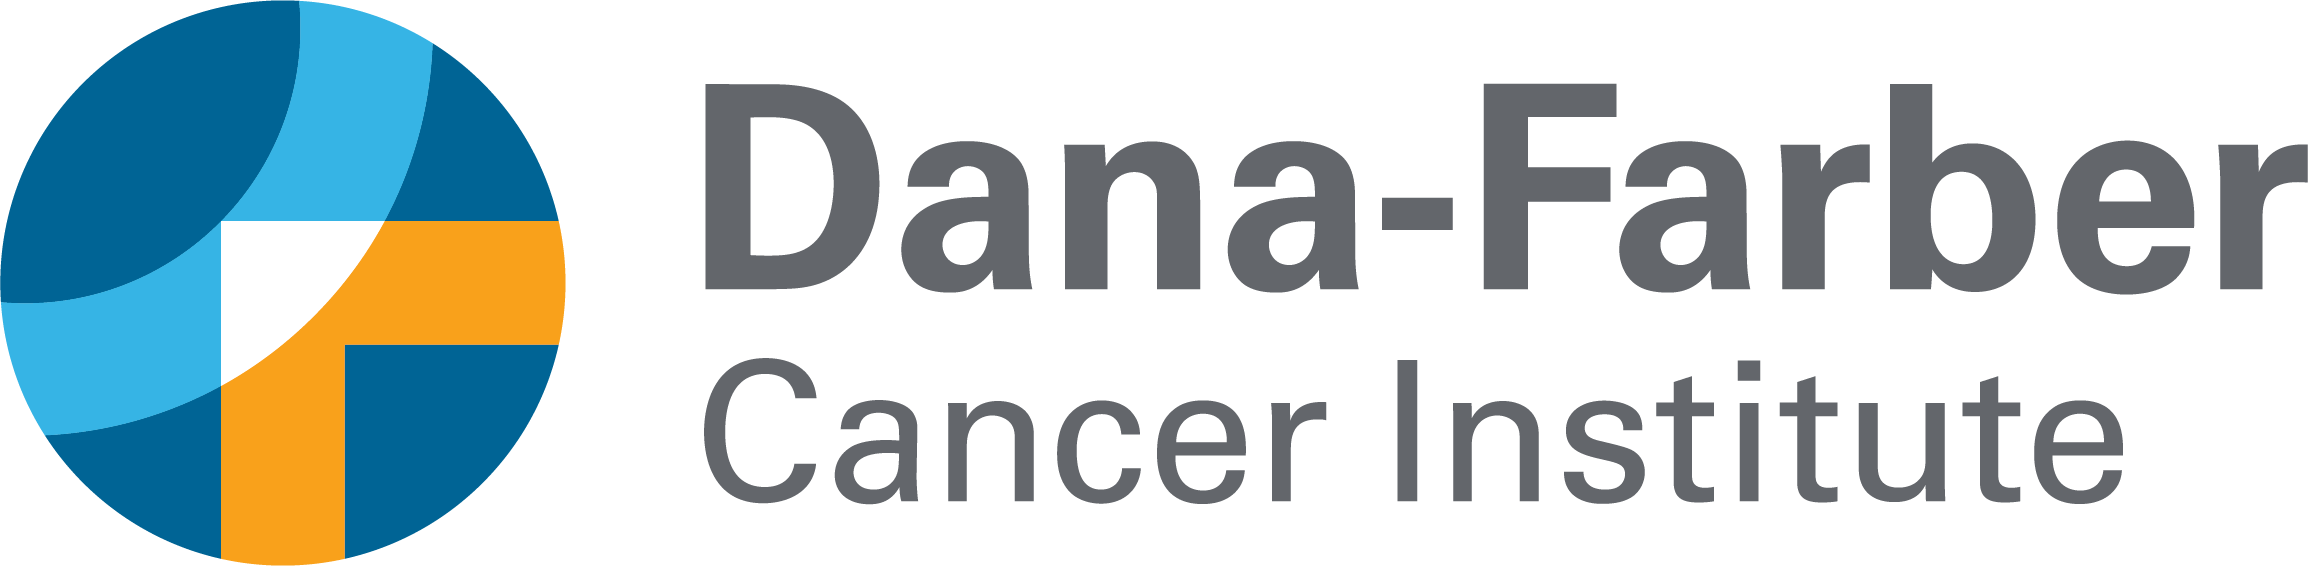 dana-farber-logo-png_4x